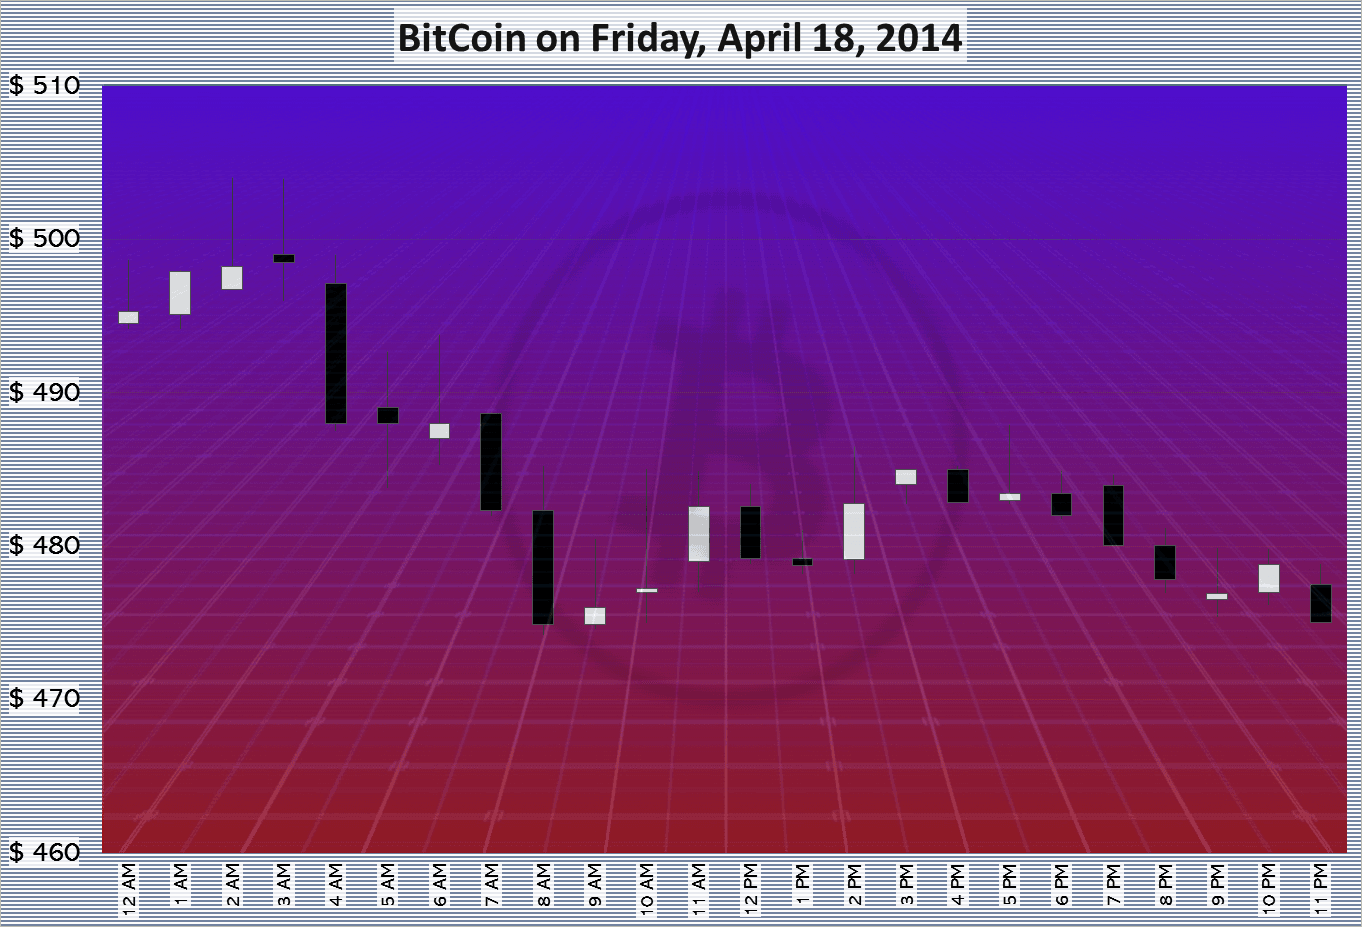 BitCoin on Friday, April 18, 2014